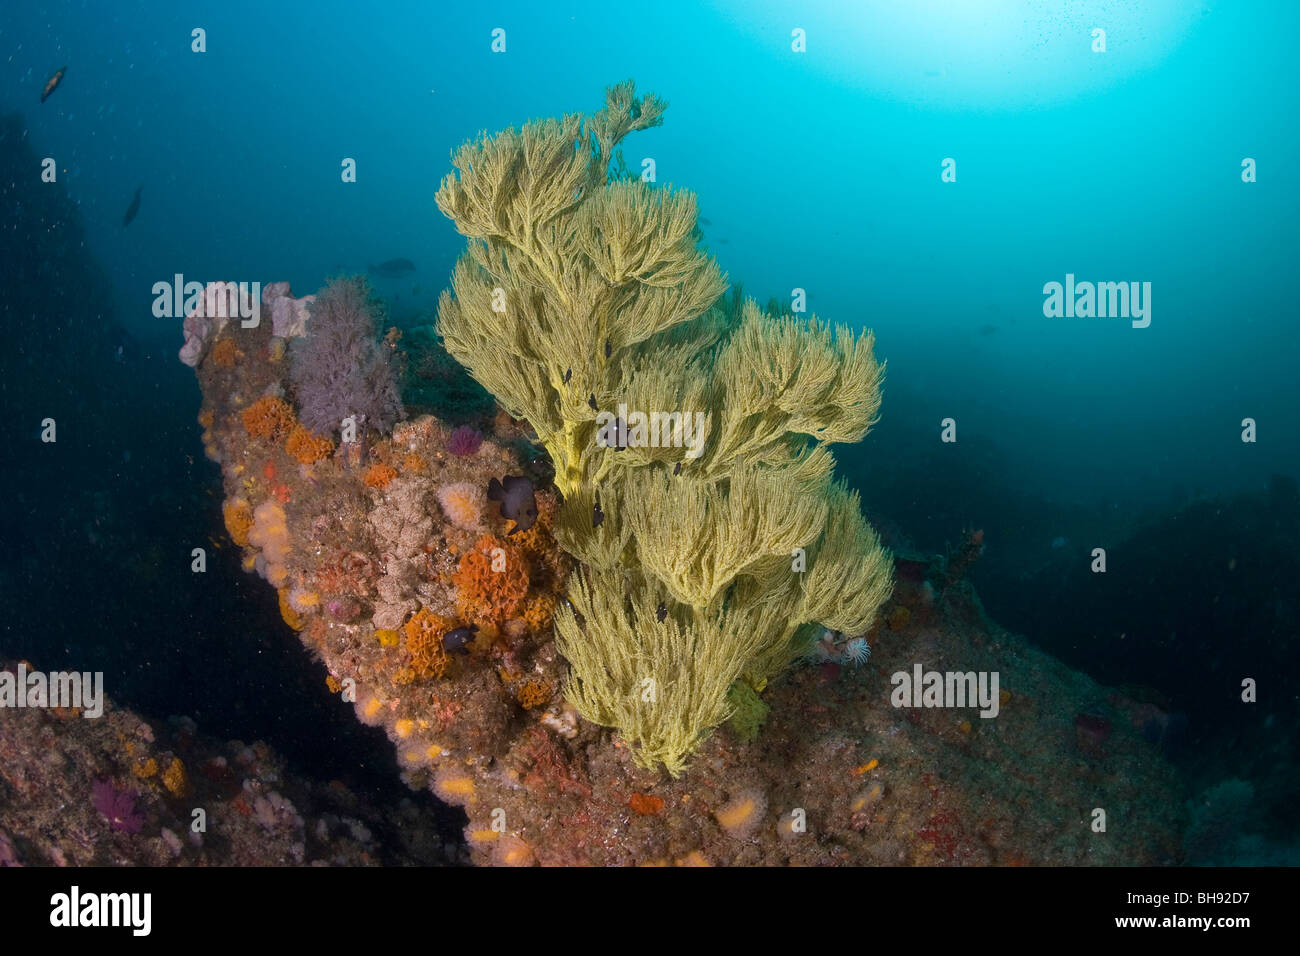 Coralli neri, Antipathes sp., Aliwal barene, Kwazulu-Natal, Oceano Indiano, Sud Africa Foto Stock